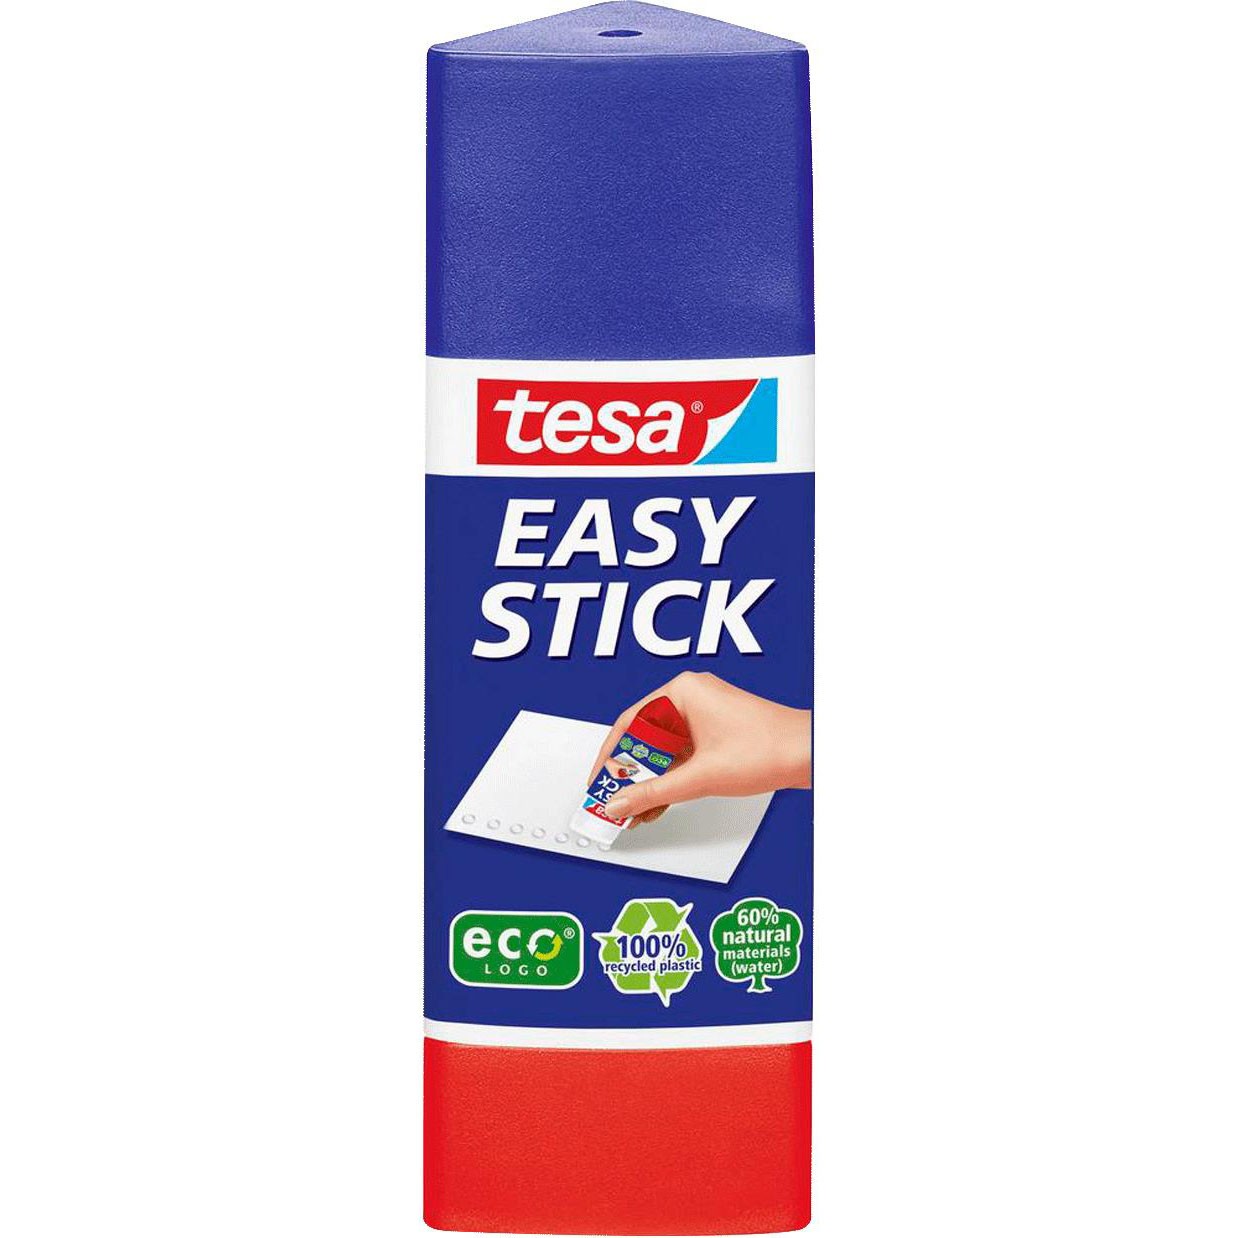 Tesa ECO 12 g trekantet limstift